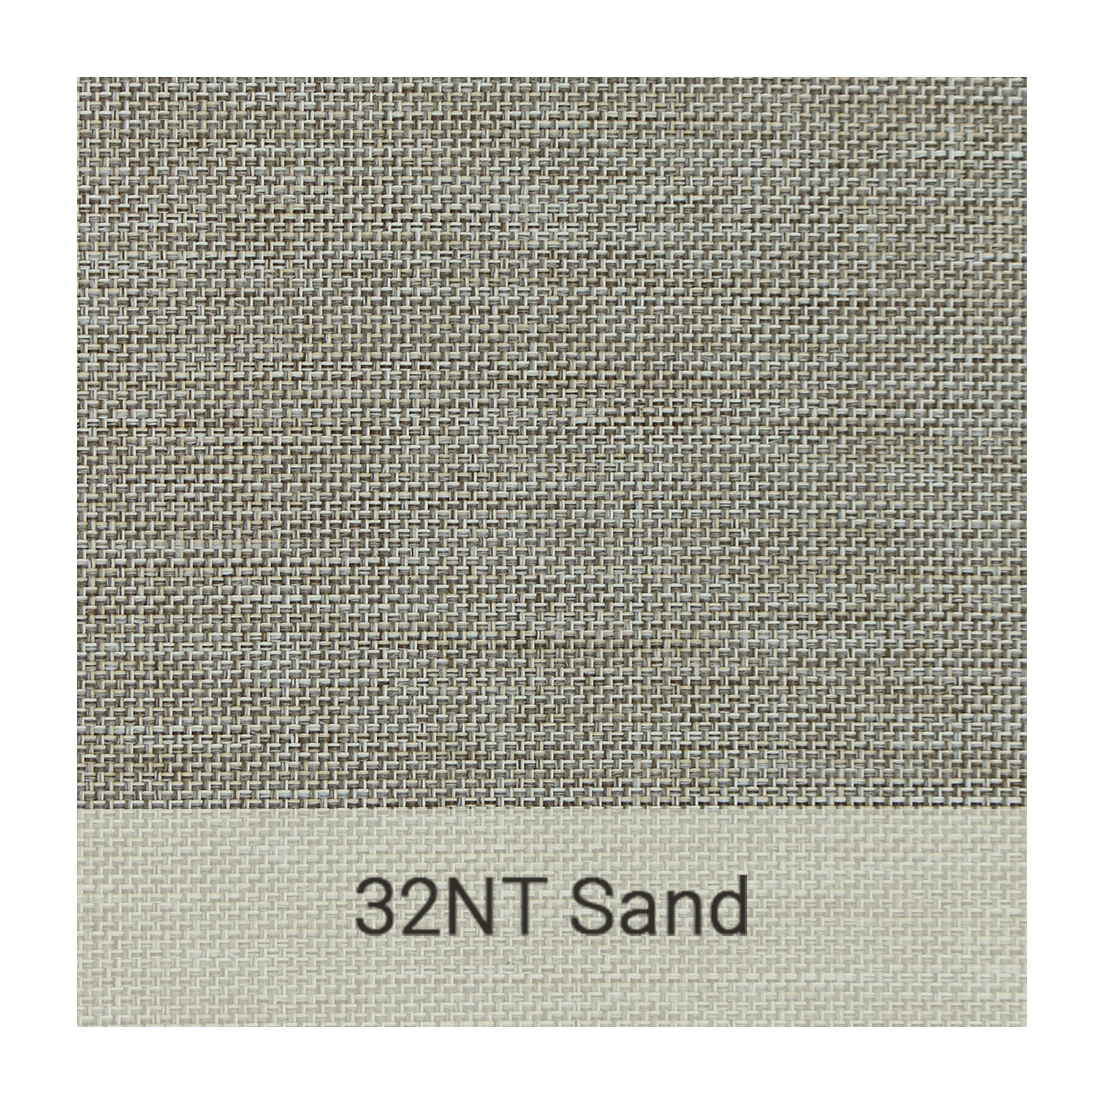 Kingston Casual nano-32nt-sand